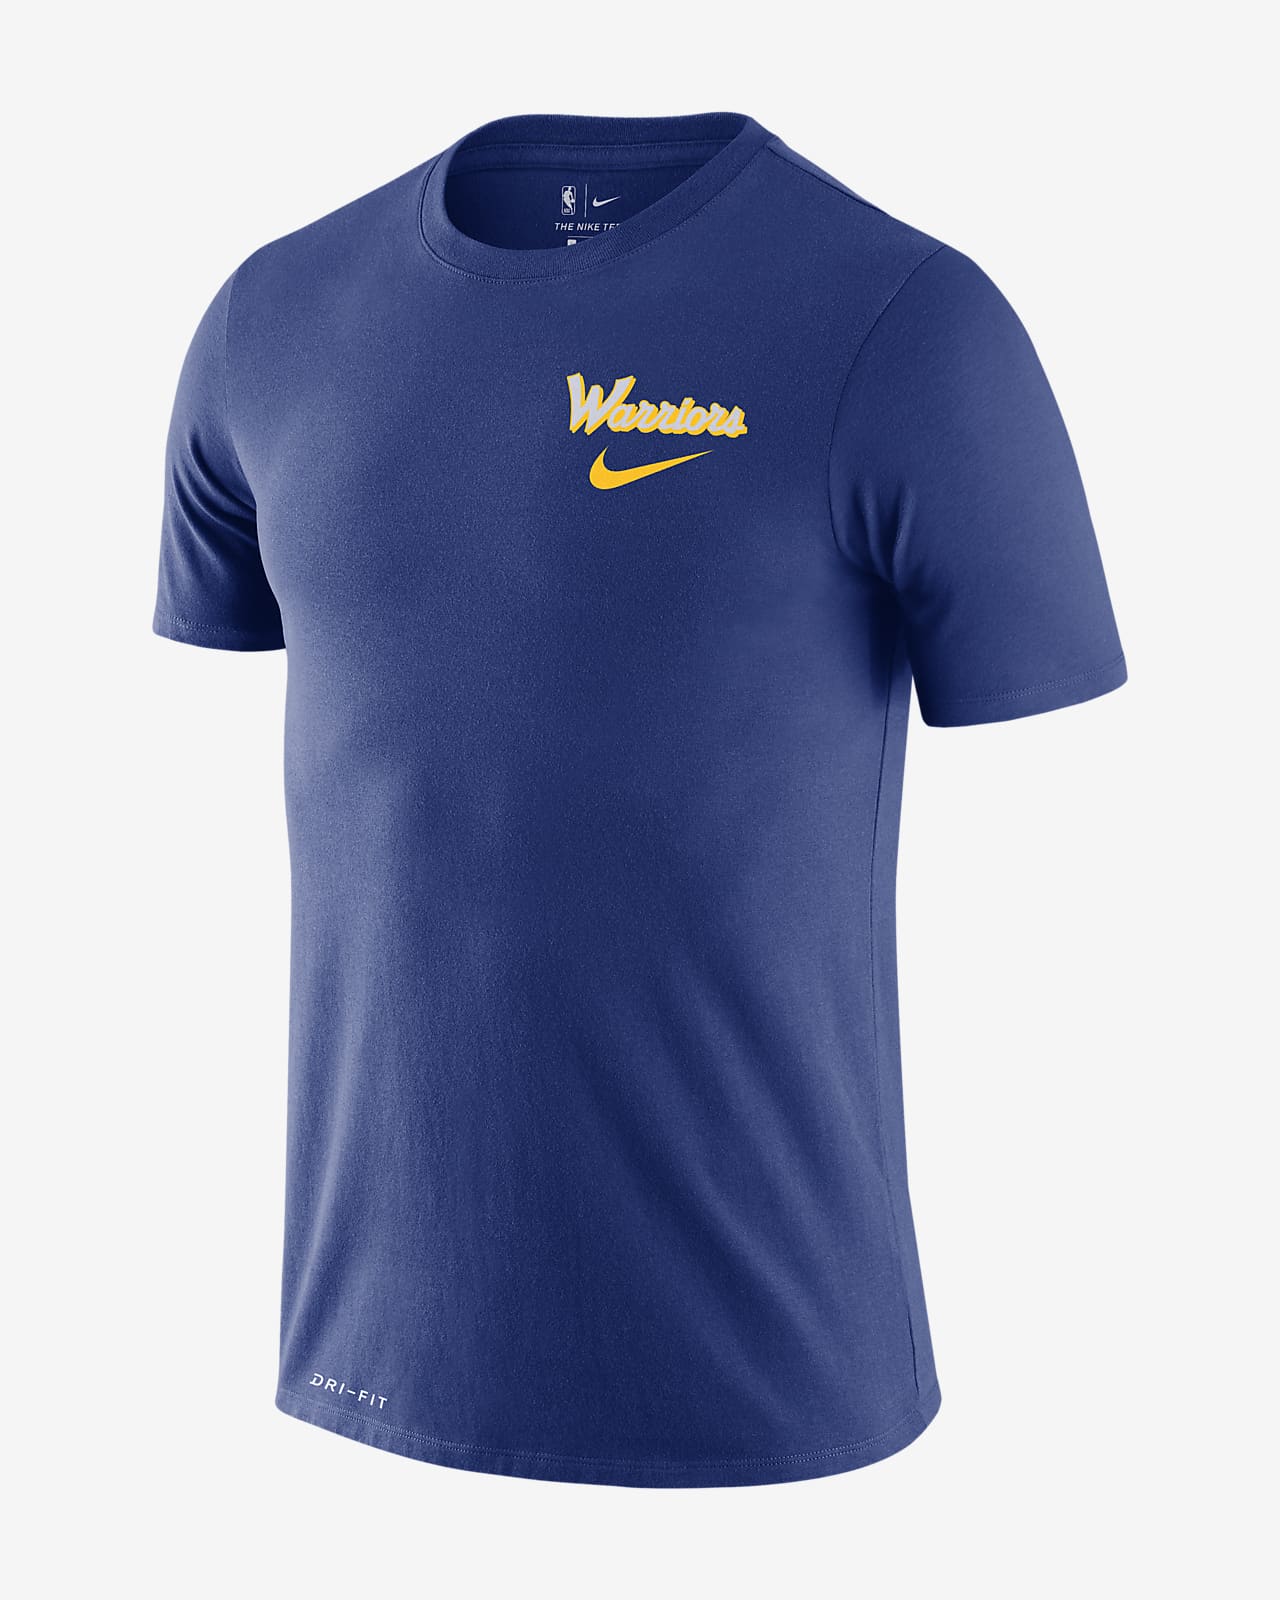 Download Warriors Wavy Wordmark Men's Nike Dri-FIT NBA T-Shirt ...